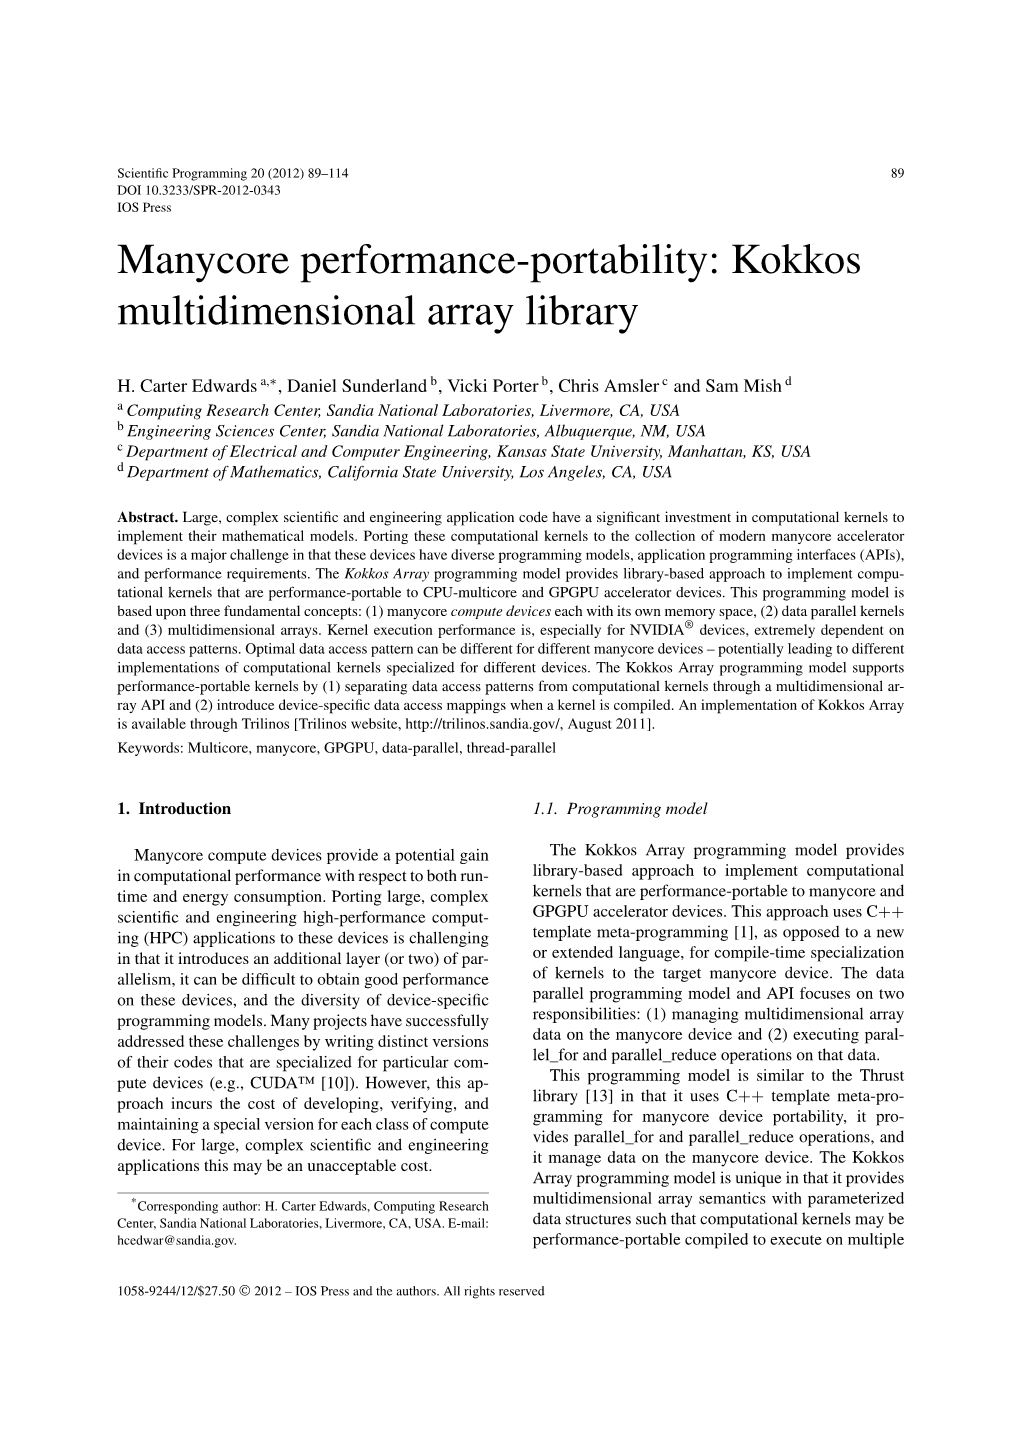 Manycore Performance-Portability: Kokkos Multidimensional Array Library